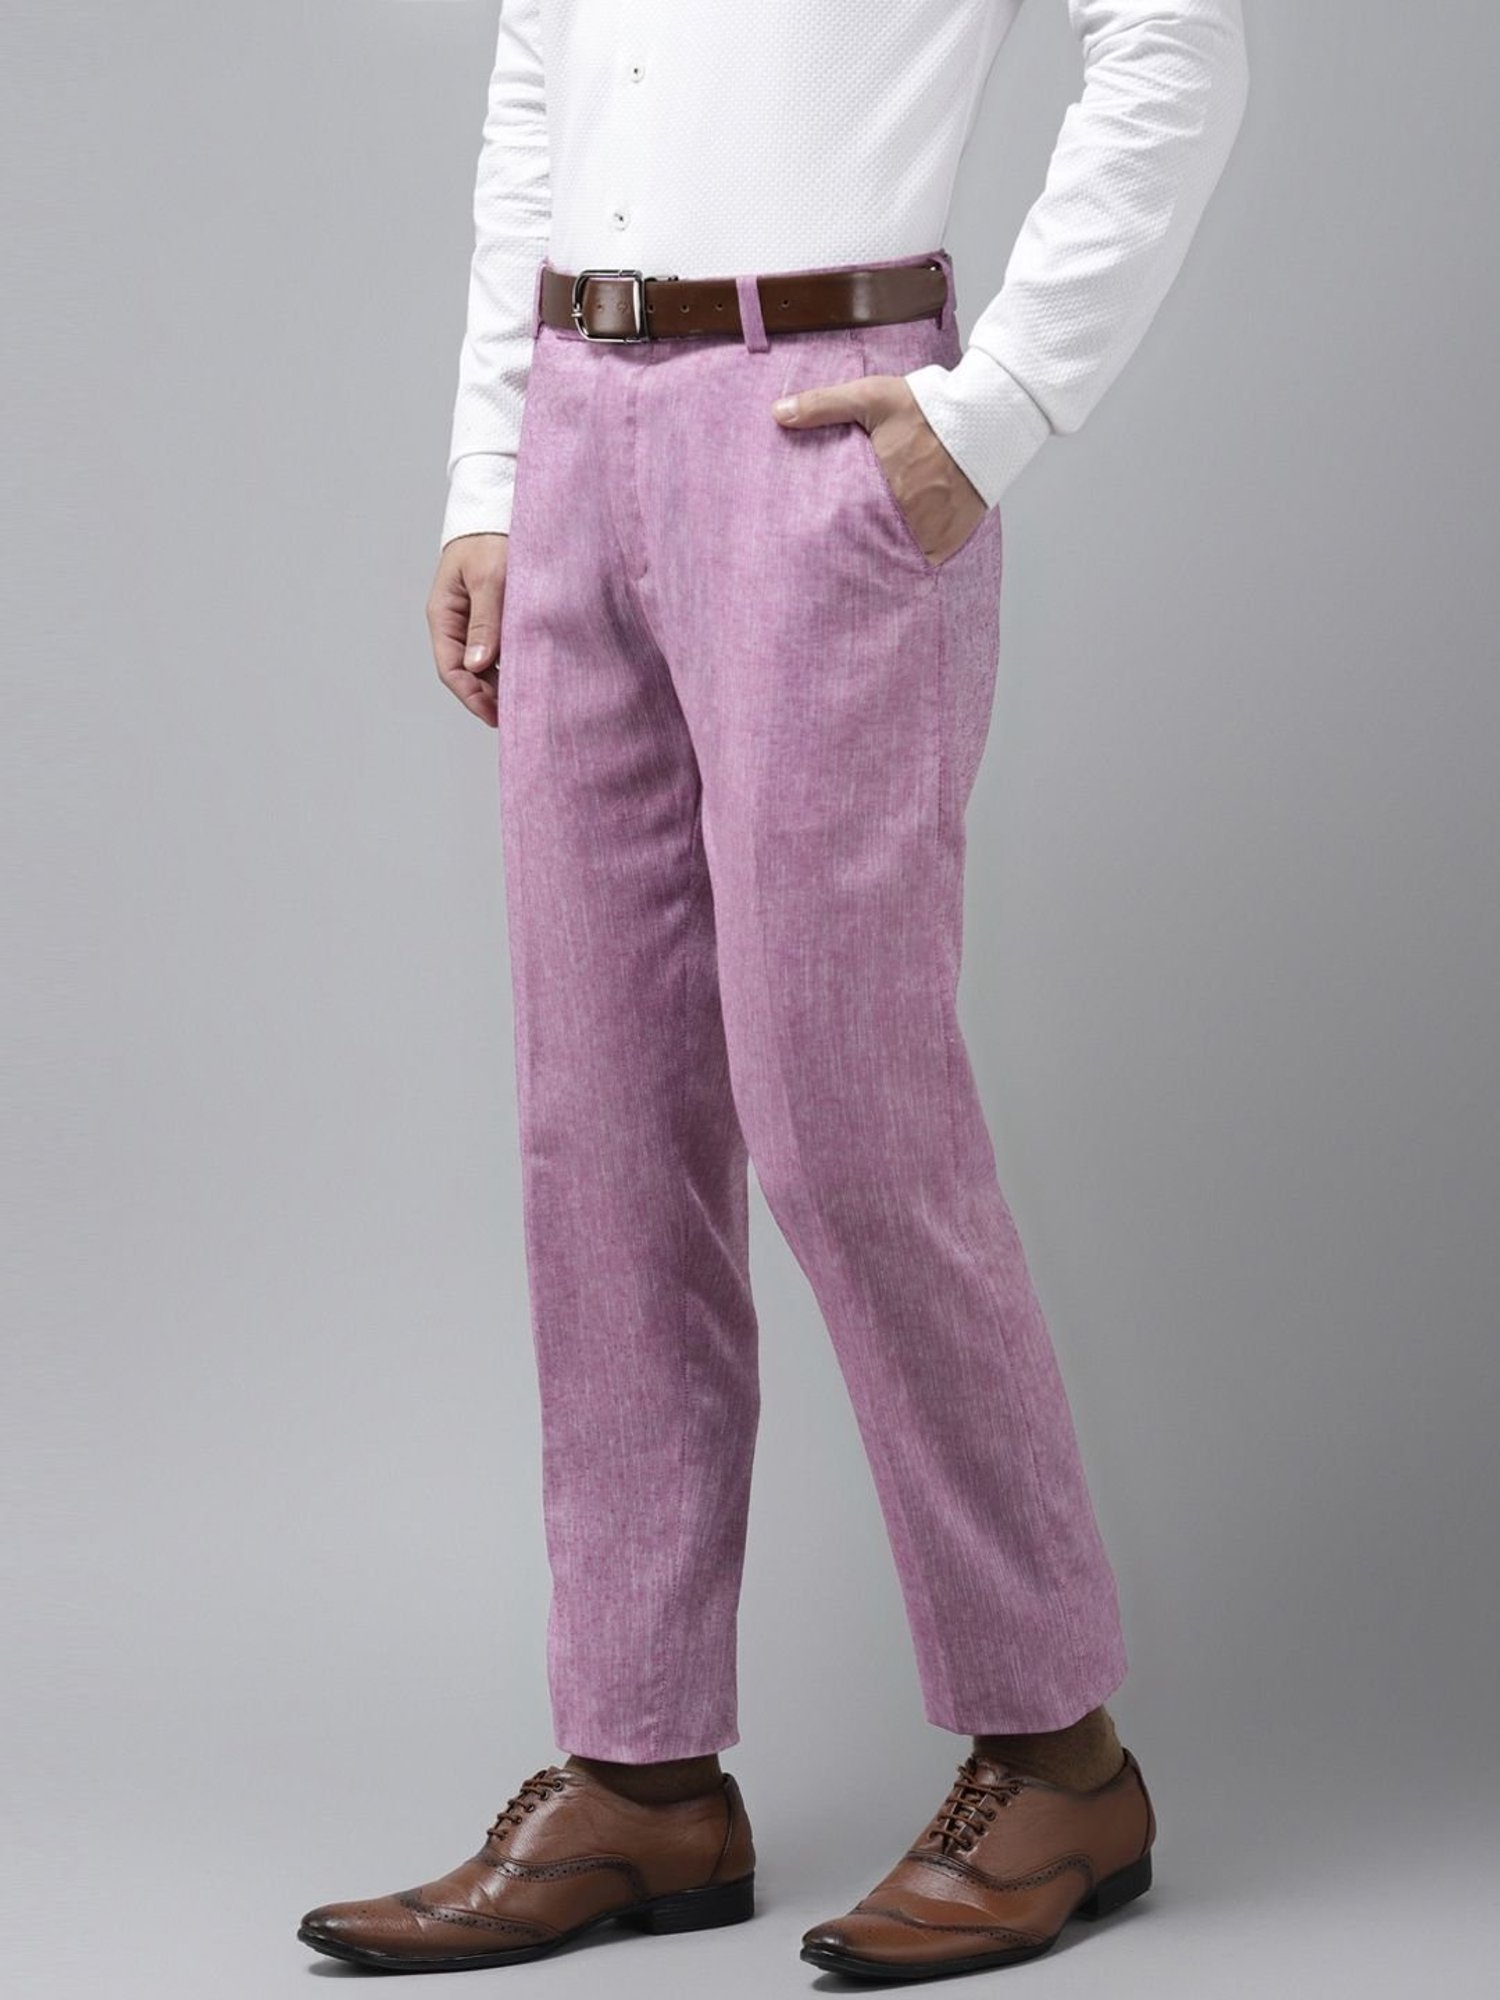 Purple Straight Cut Corduroy Pants 90s Hippie Retro High Waist Relaxed Jeans  | eBay